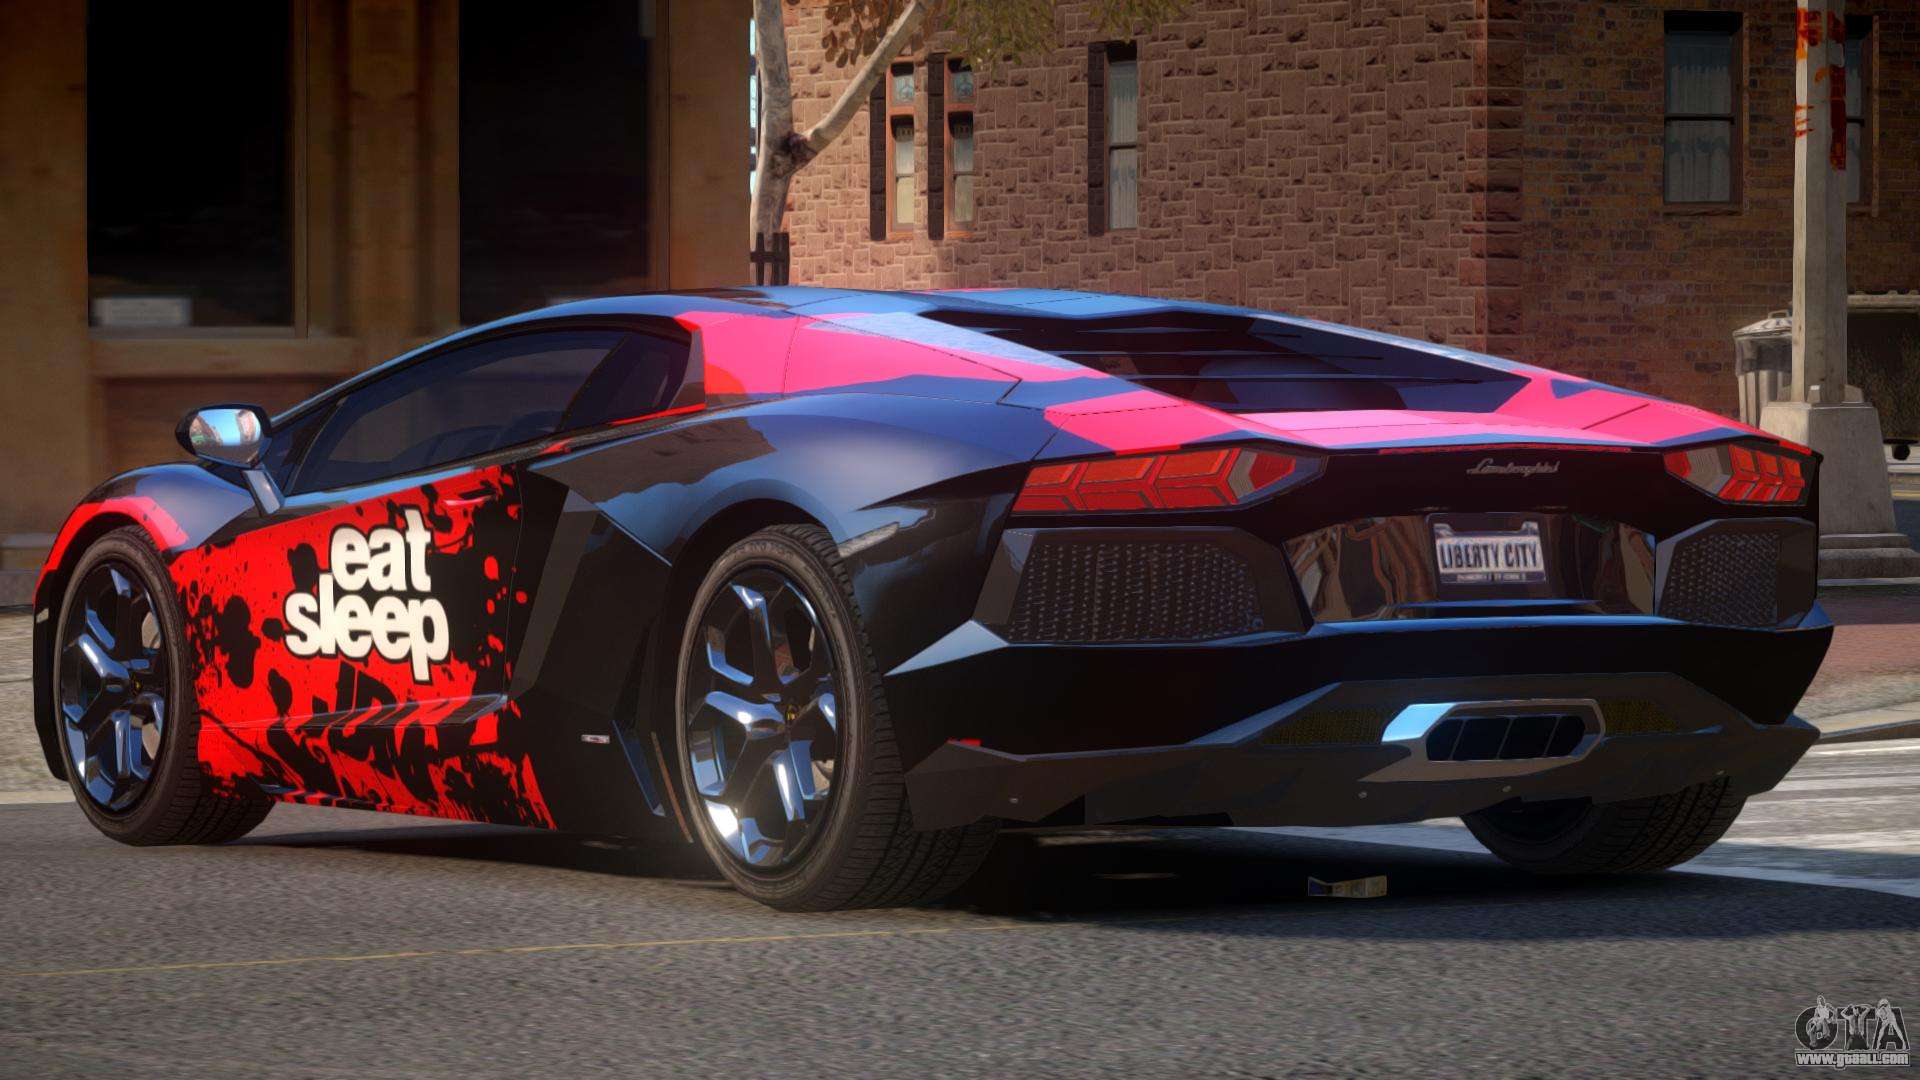 Lamborghini Aventador G-Tuned PJ1 for GTA 4